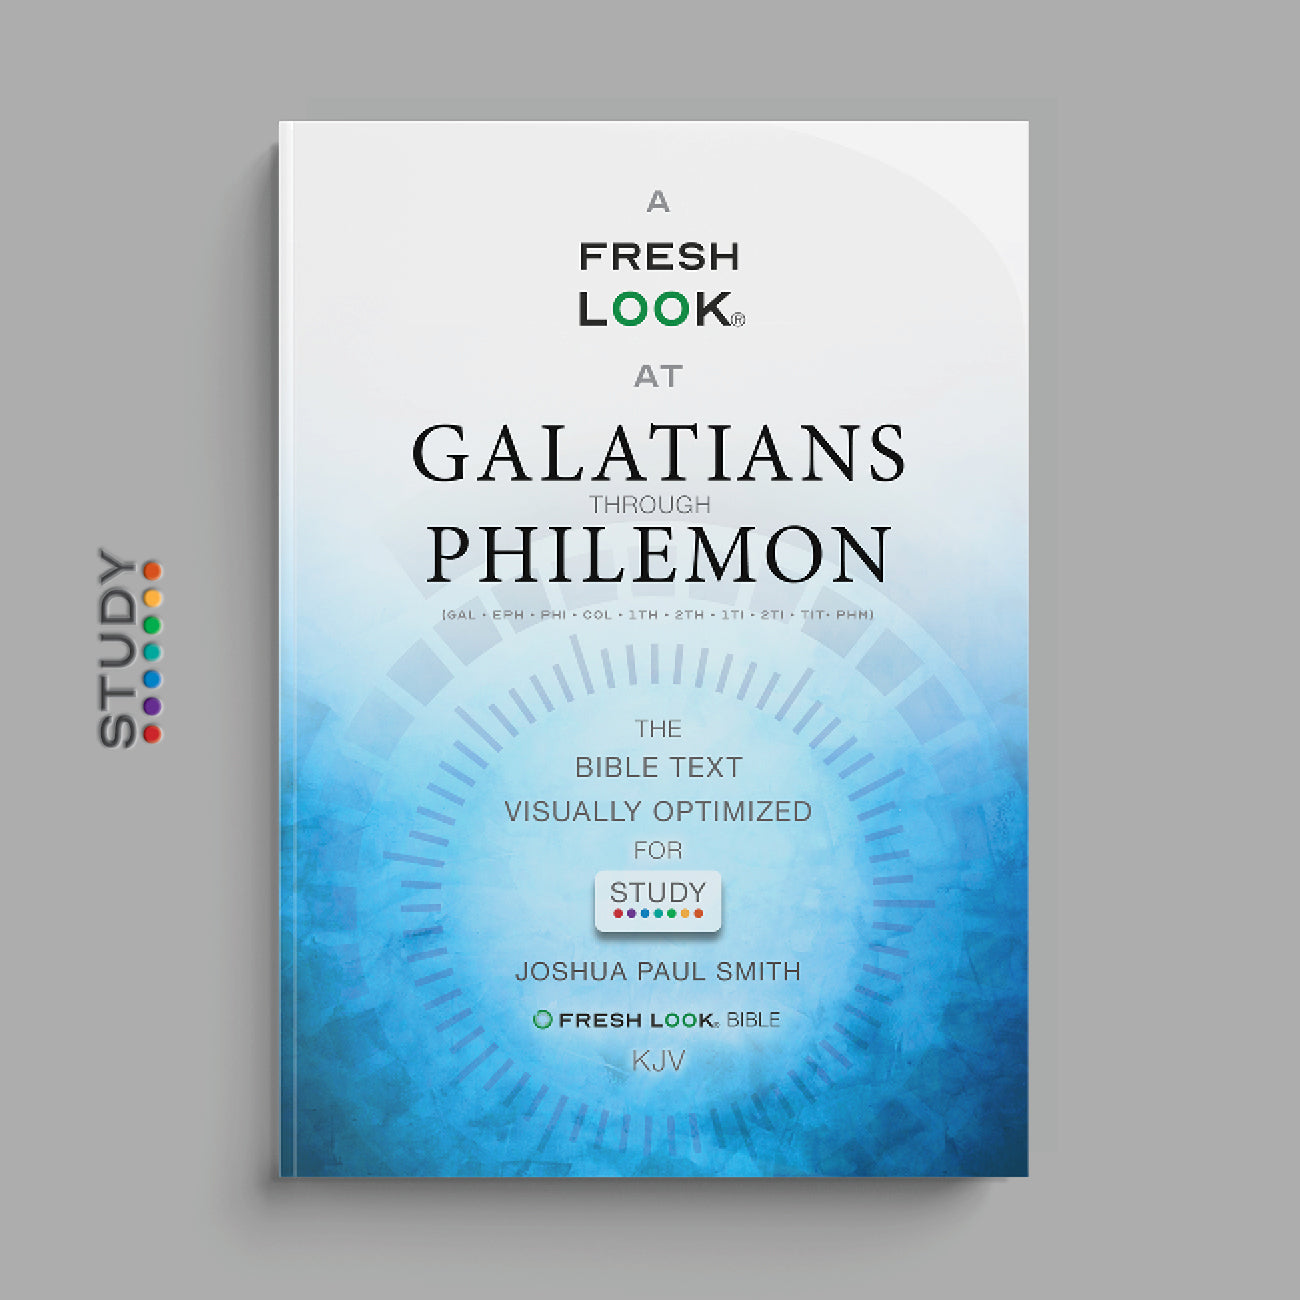 Galatians - Philemon Book (Study)